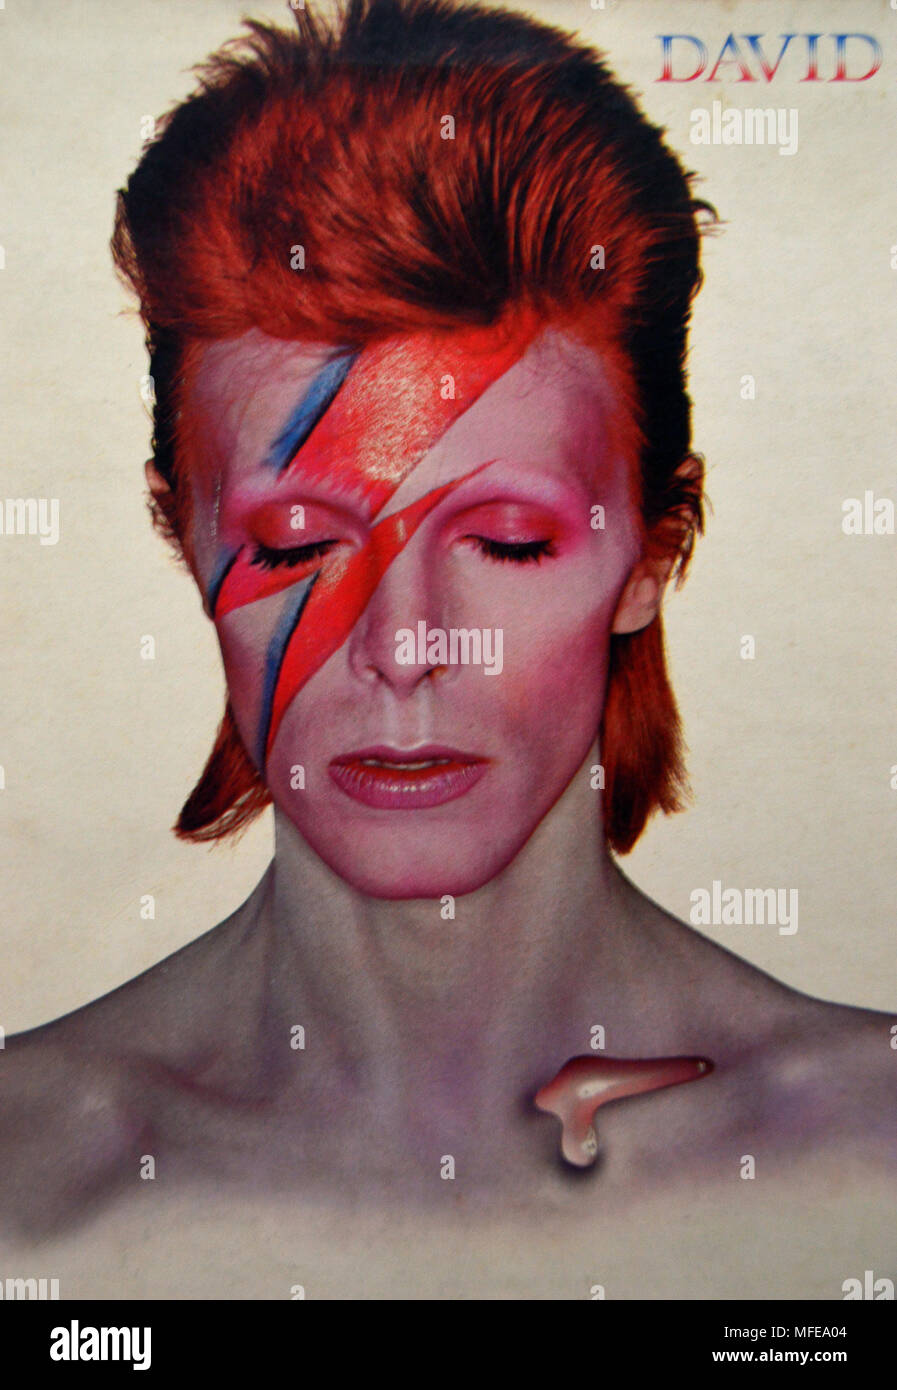 David Bowie Aladdin Sane Pochette couvercle en RCA Records Photo Stock -  Alamy